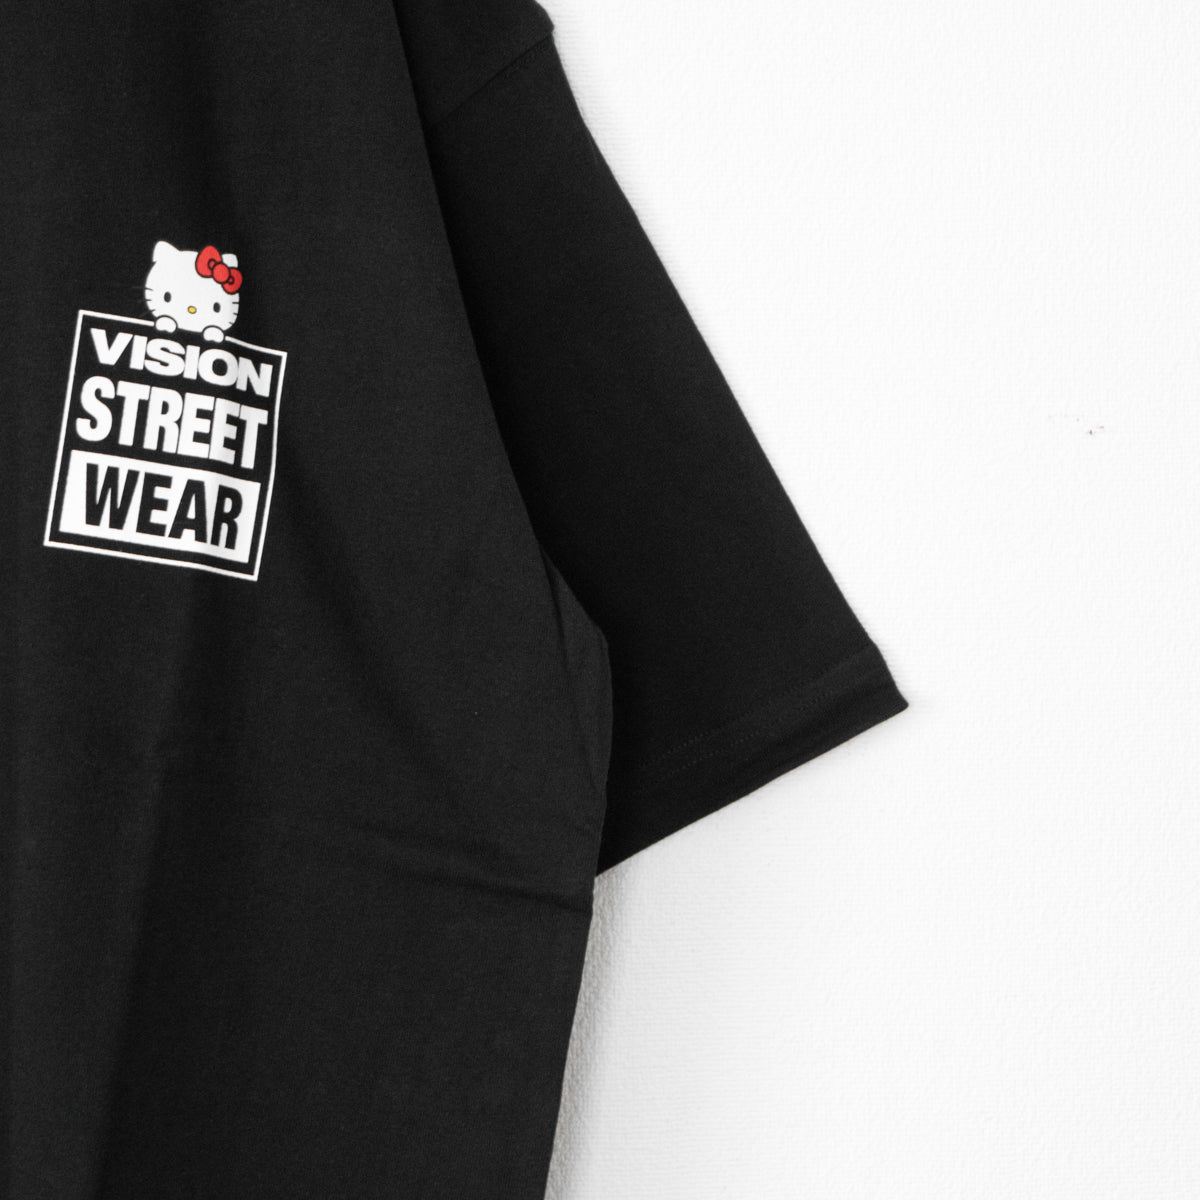 VISION STREET WEAR X HELLO KITTY Maglogo T-shirt